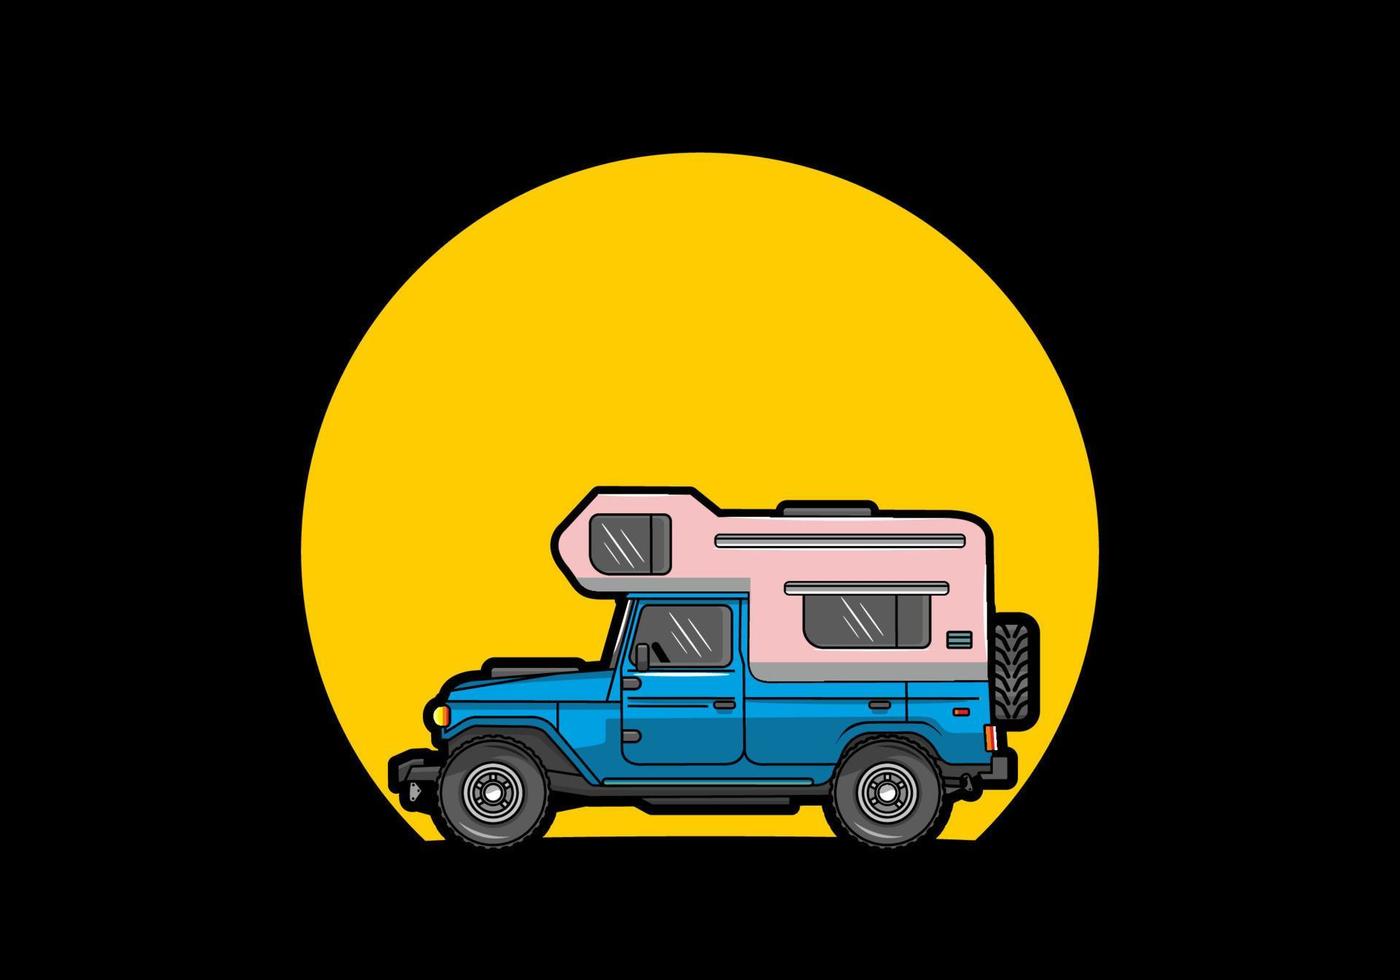 Stocky camper car illustration badge vector